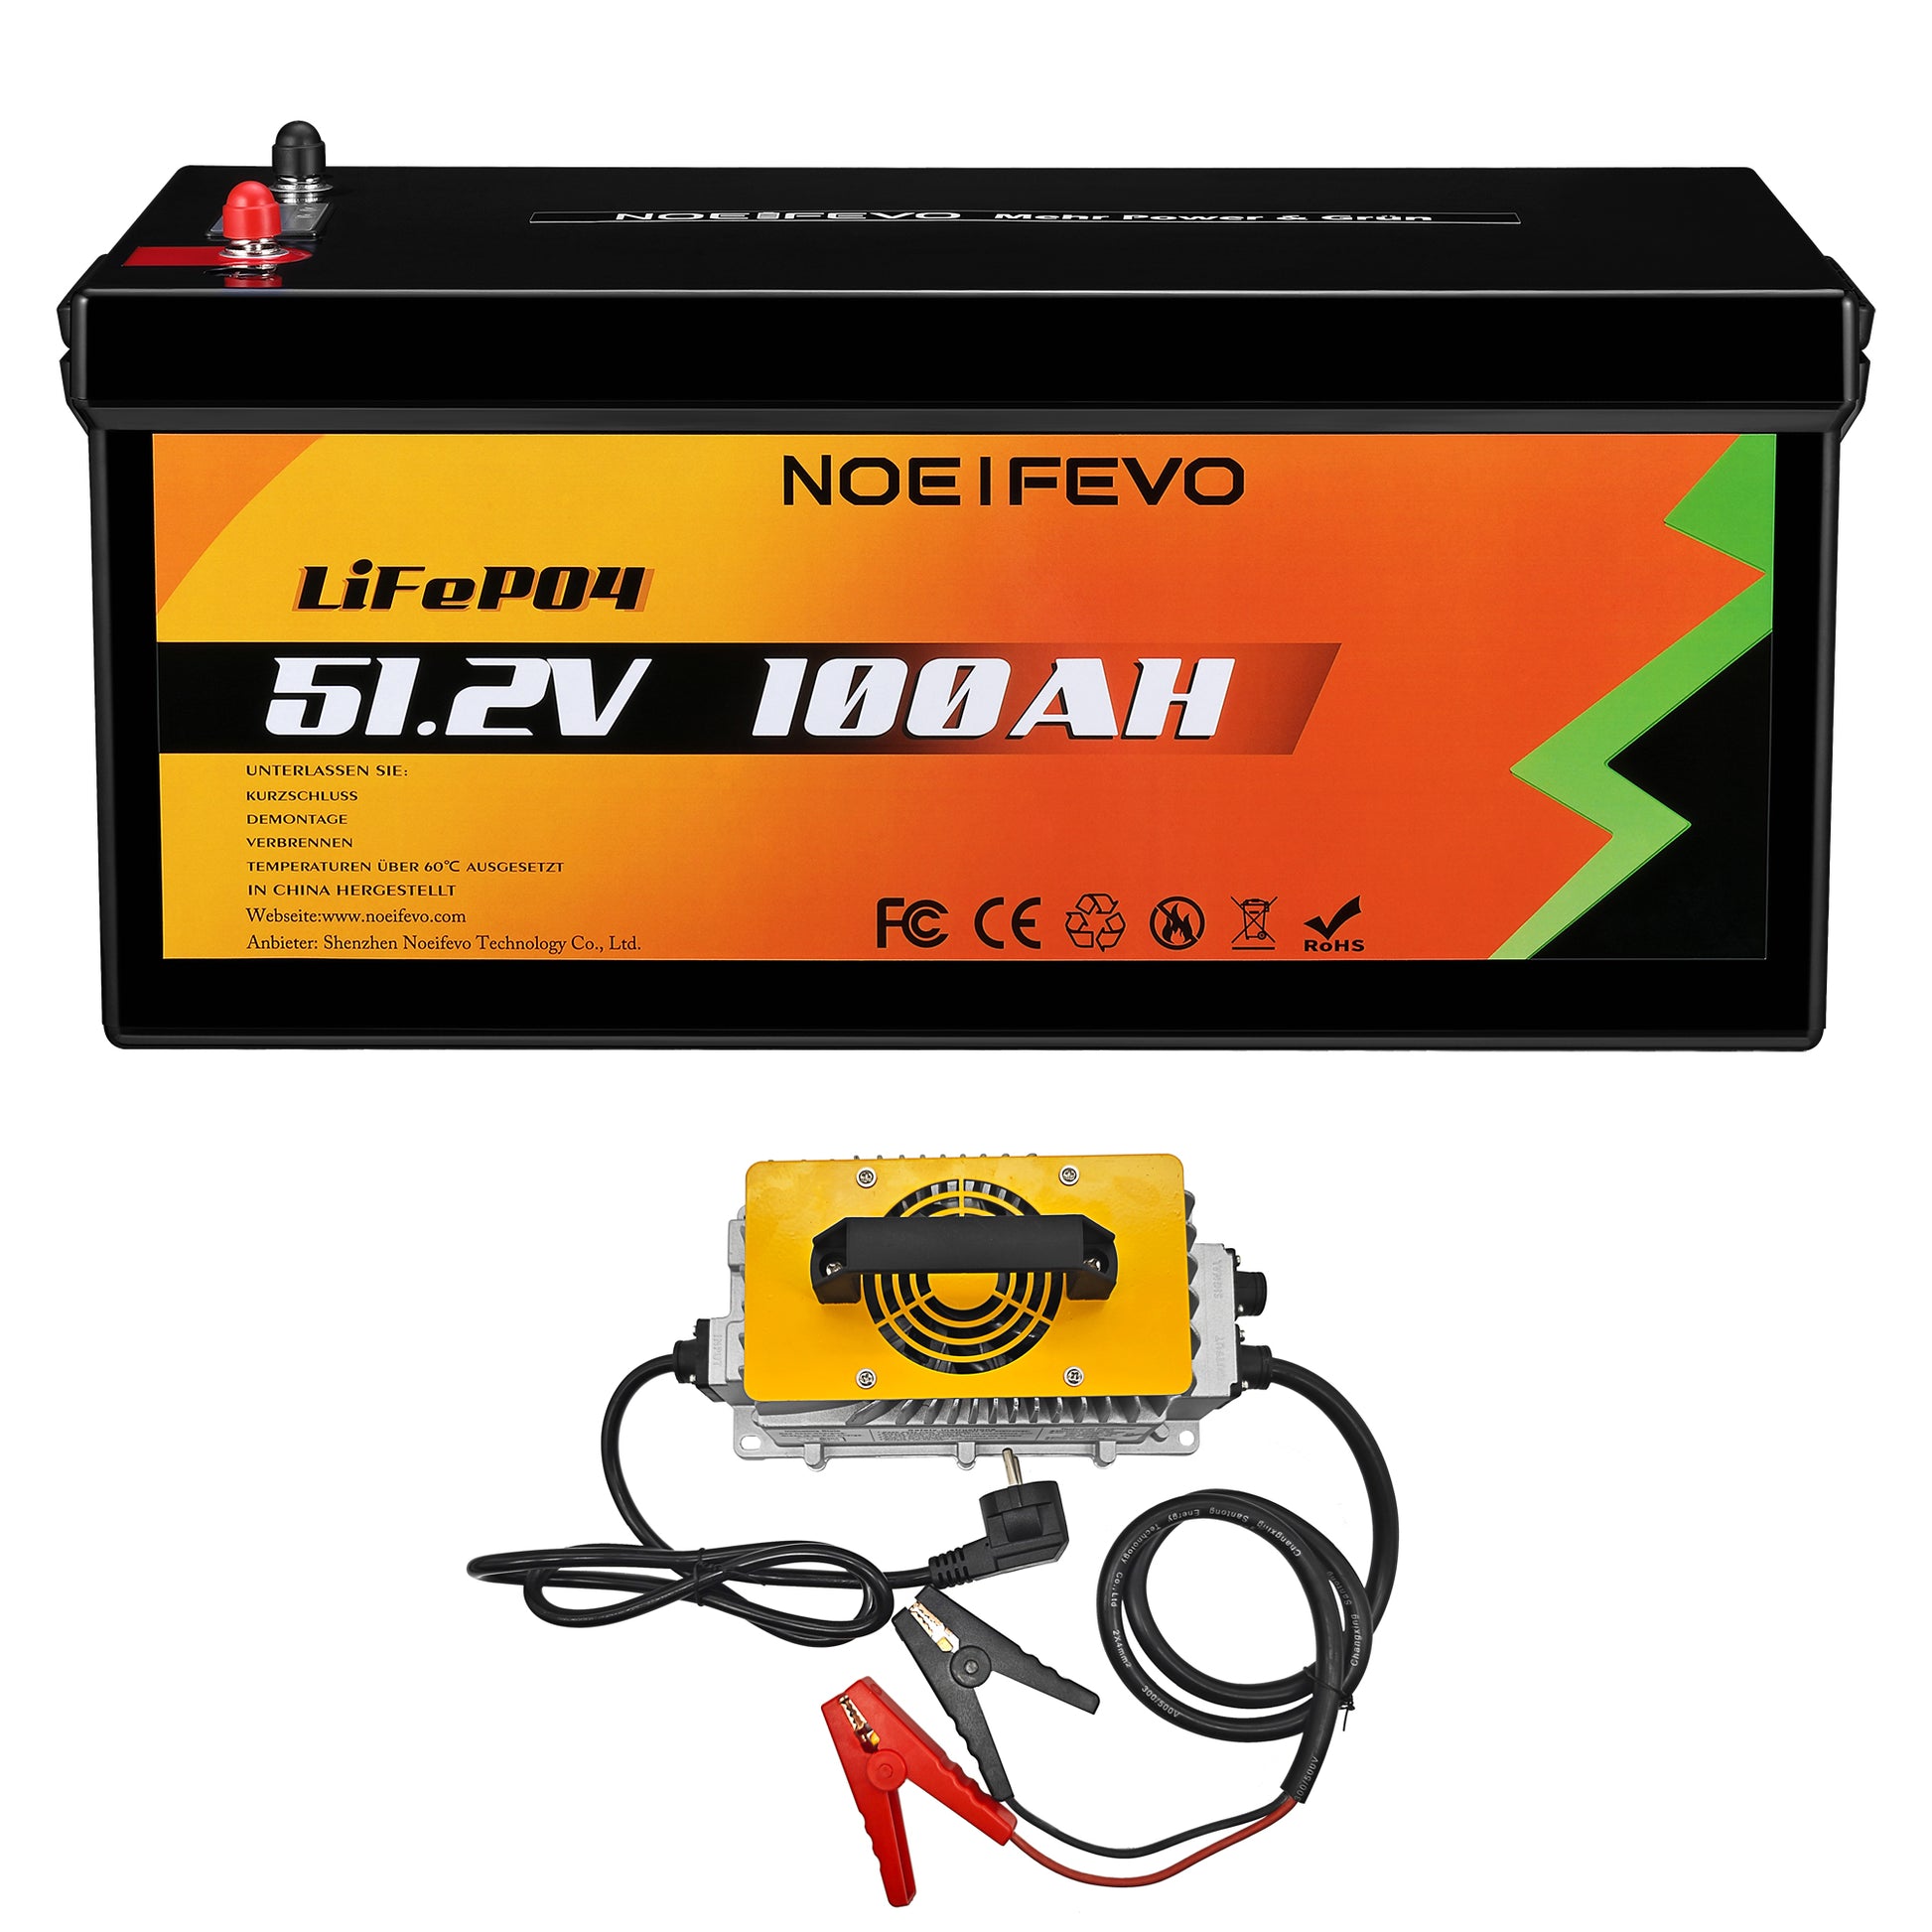 NOEIFEVO 5.12KWh 51.2V 100AH LiFePO4 Lithium Battery, 100A BMS